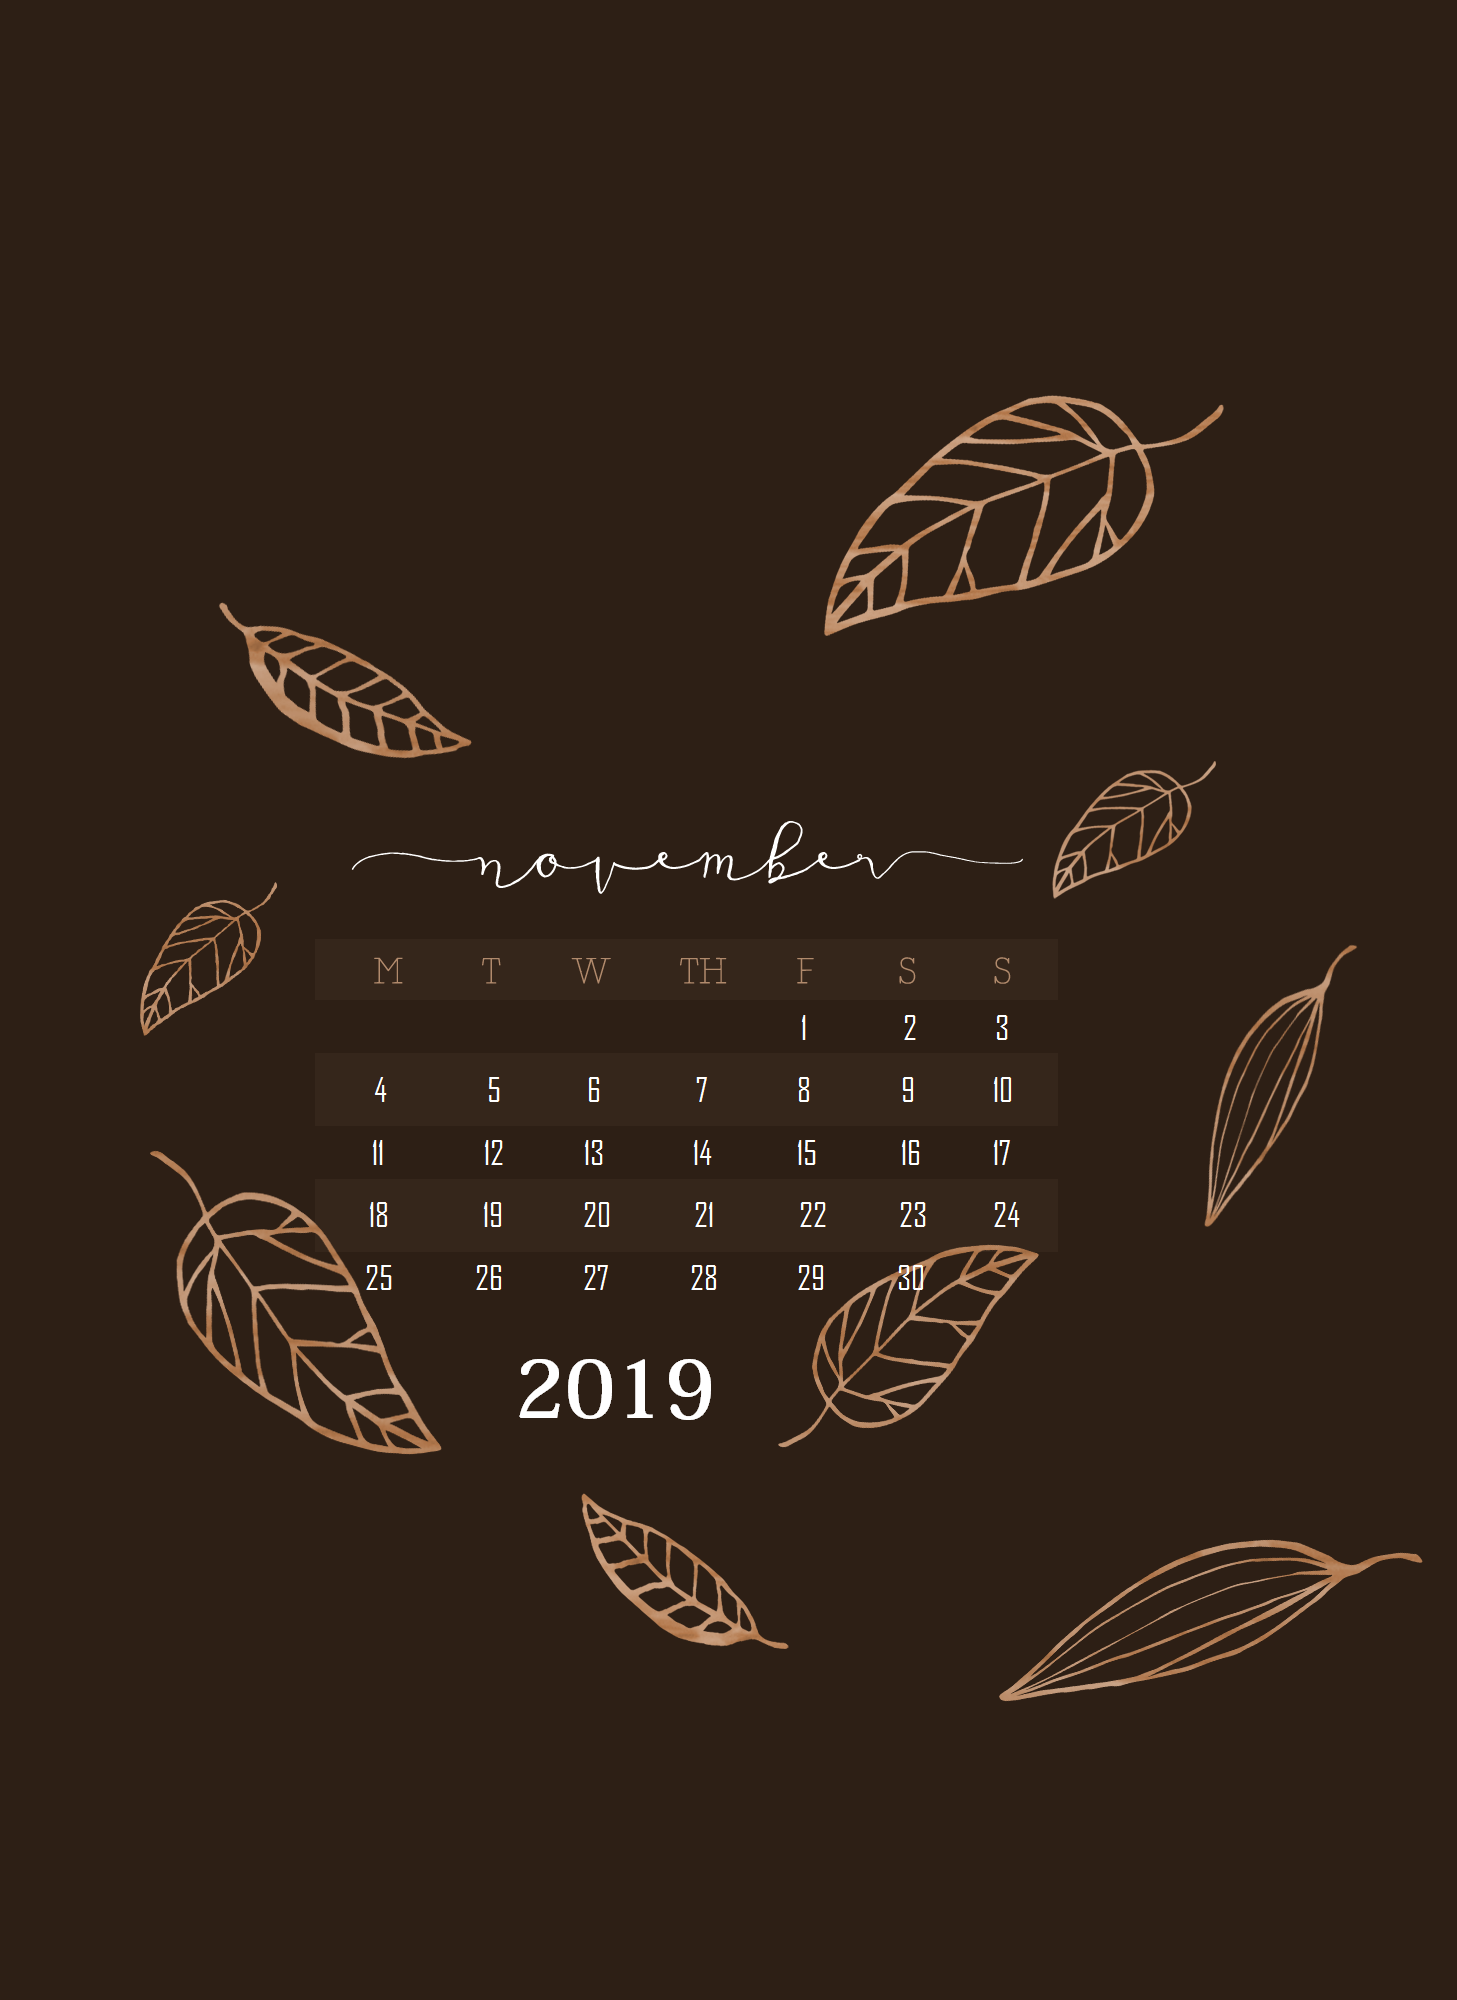 November 2019 Iphone Calendar Wallpaper - HD Wallpaper 